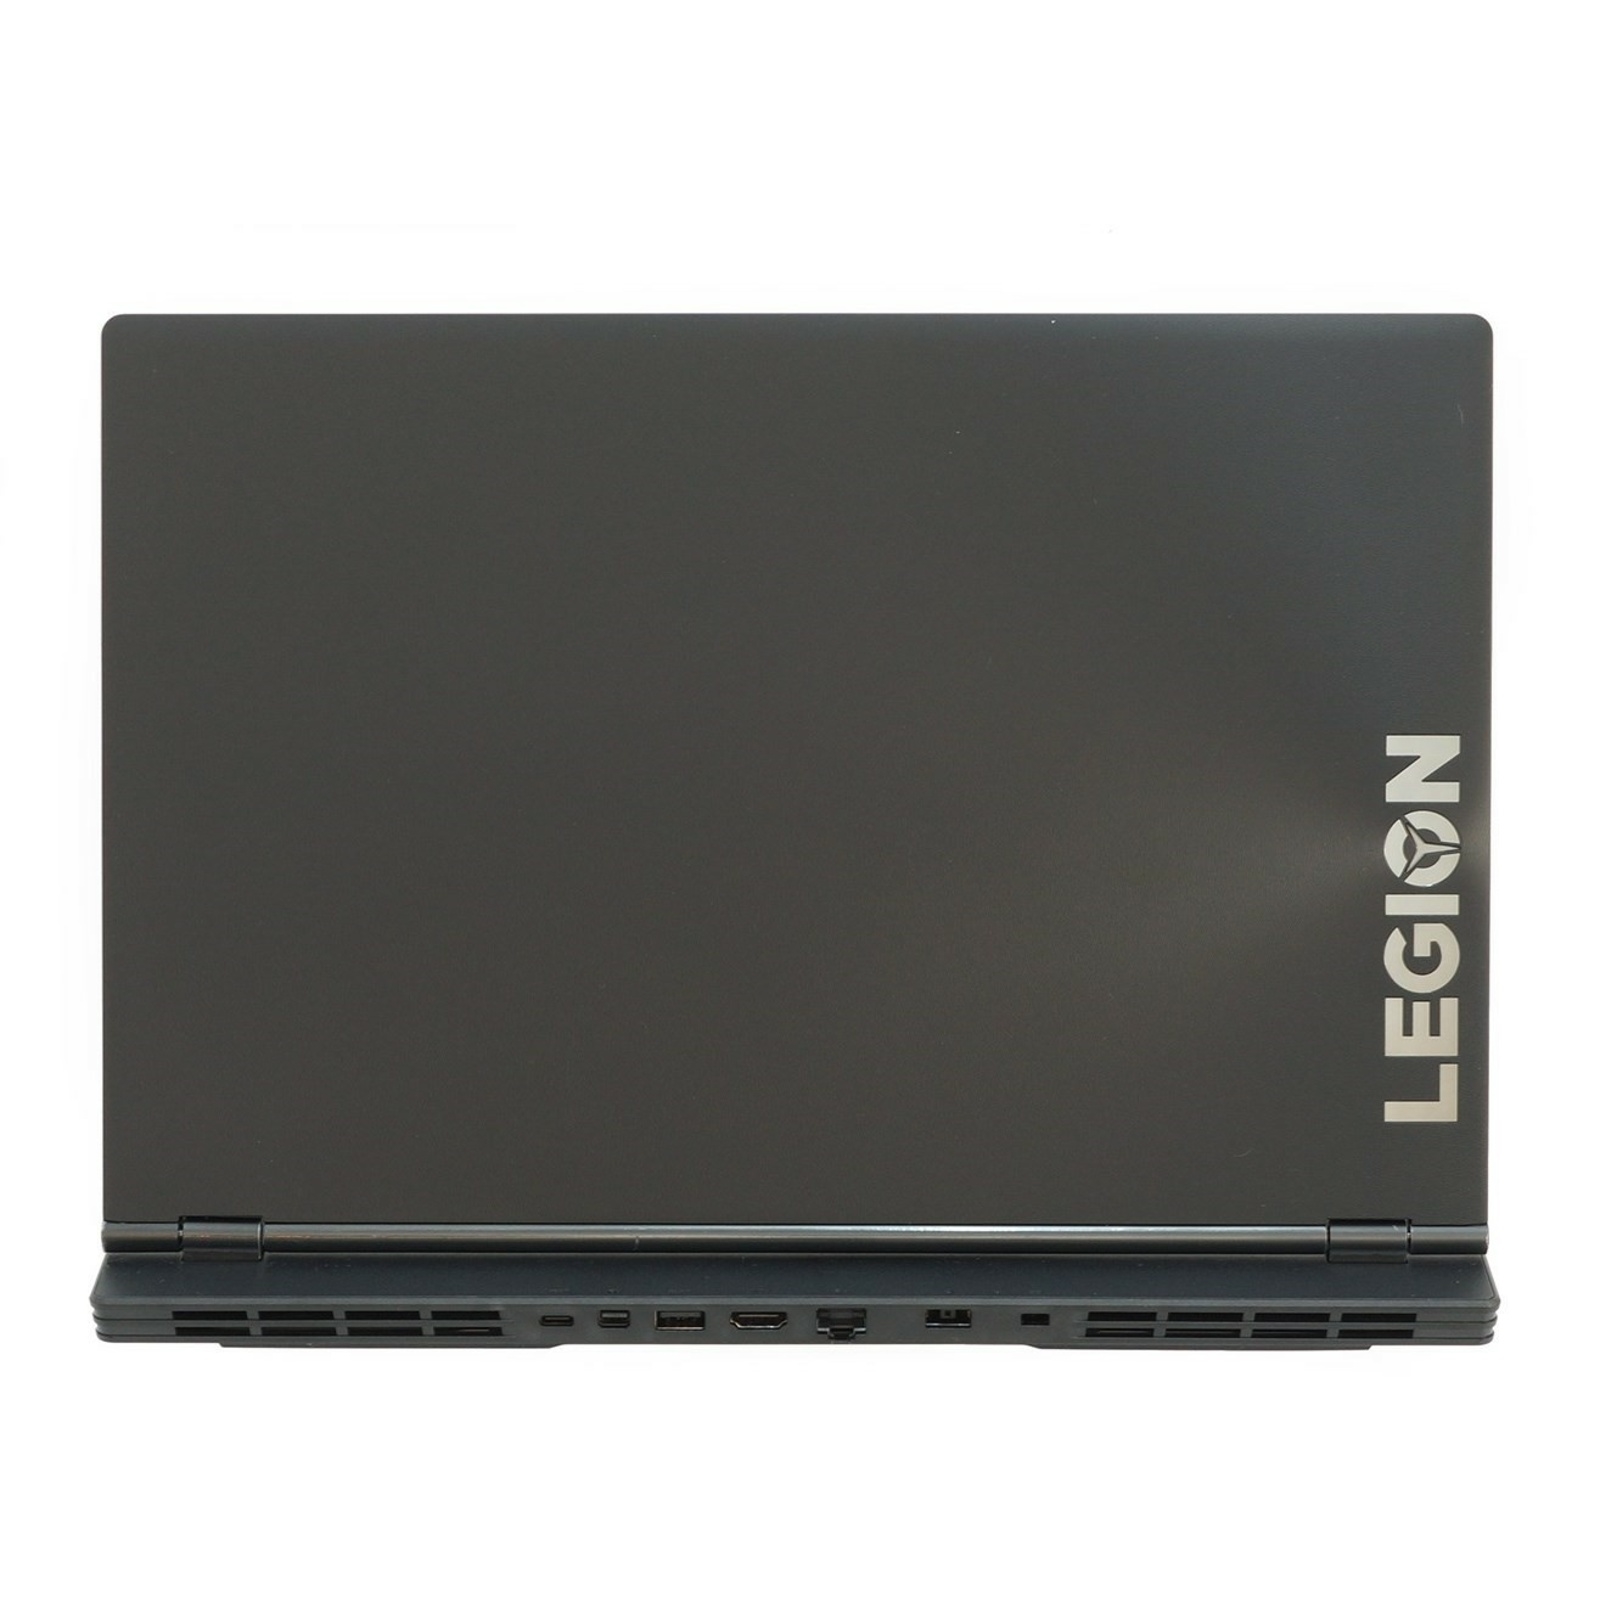 LENOVO LEGION Y540 81SX008ETX I7-9750H 16GB 256GB SSD 2TB 6GB GTX1660Ti 15.6" FHD IPS FREEDOS NOTEBO